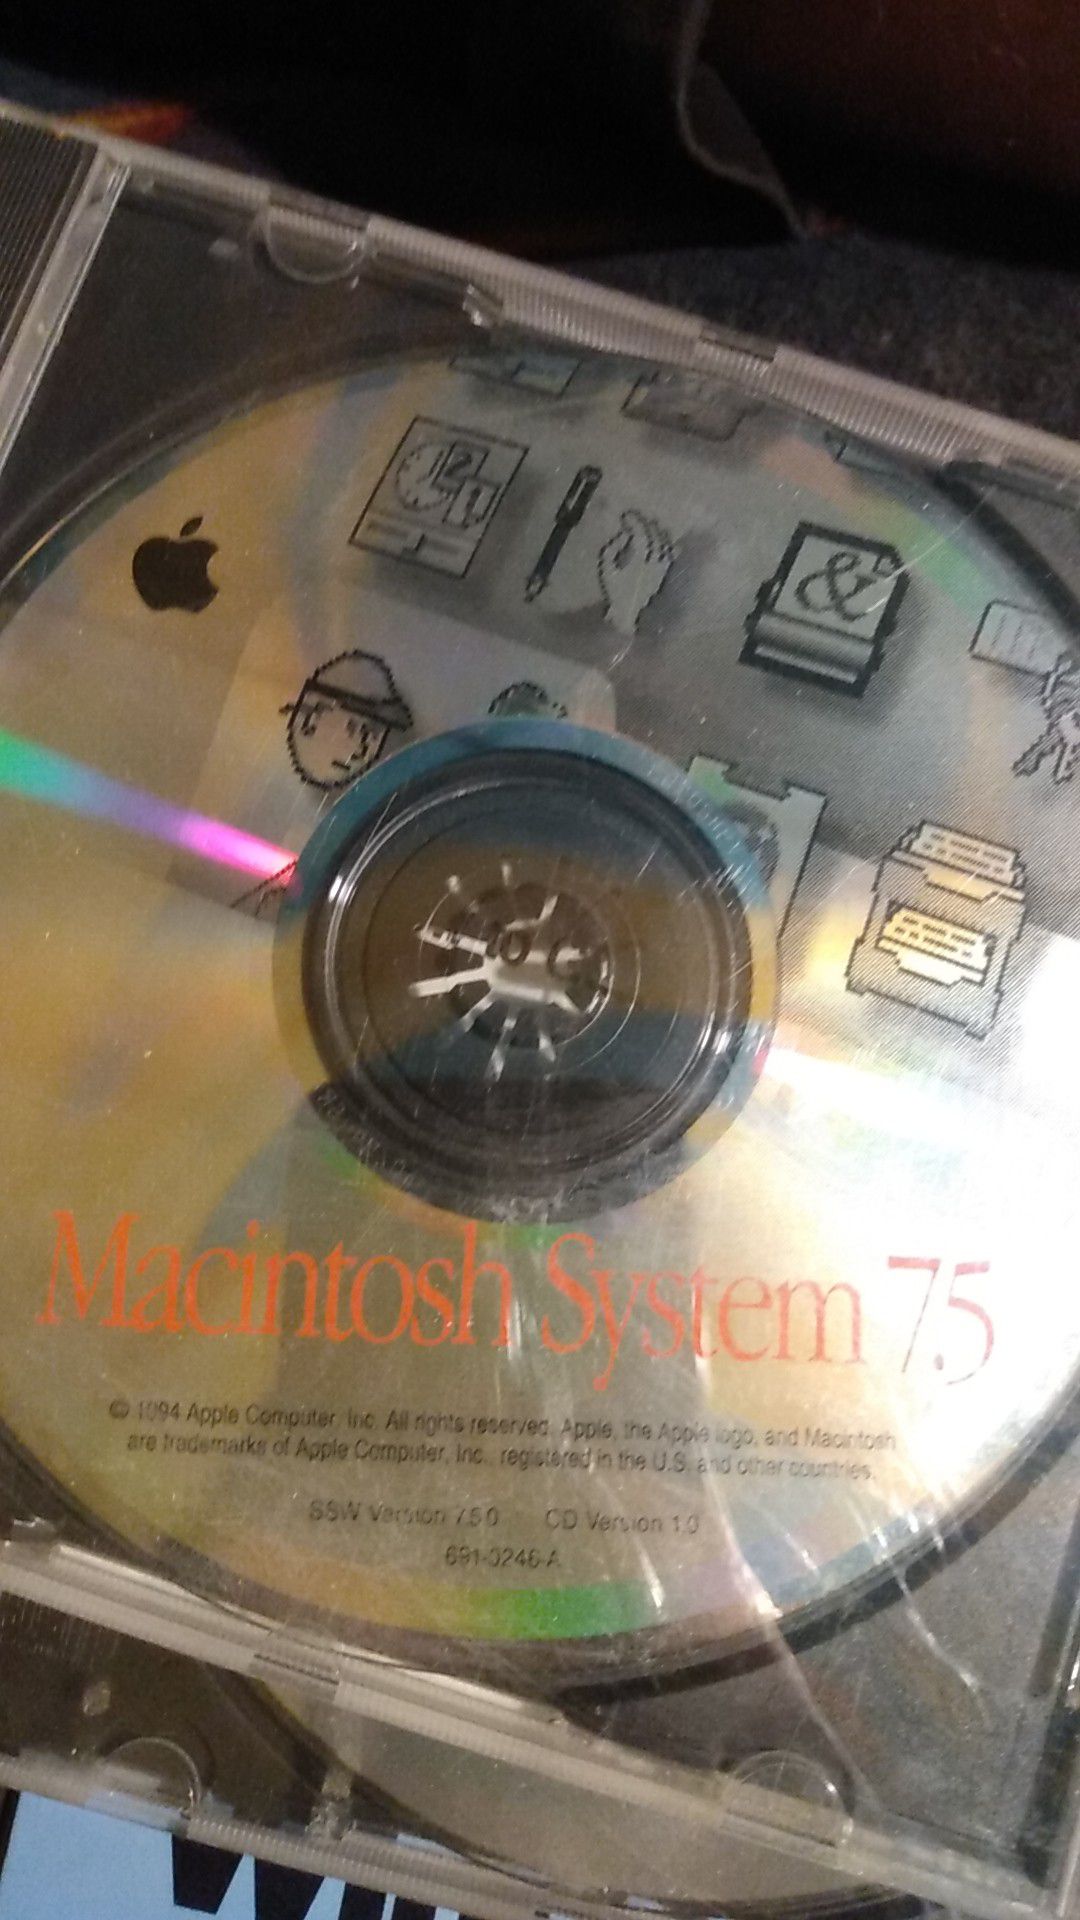 Macintosh system 7.5